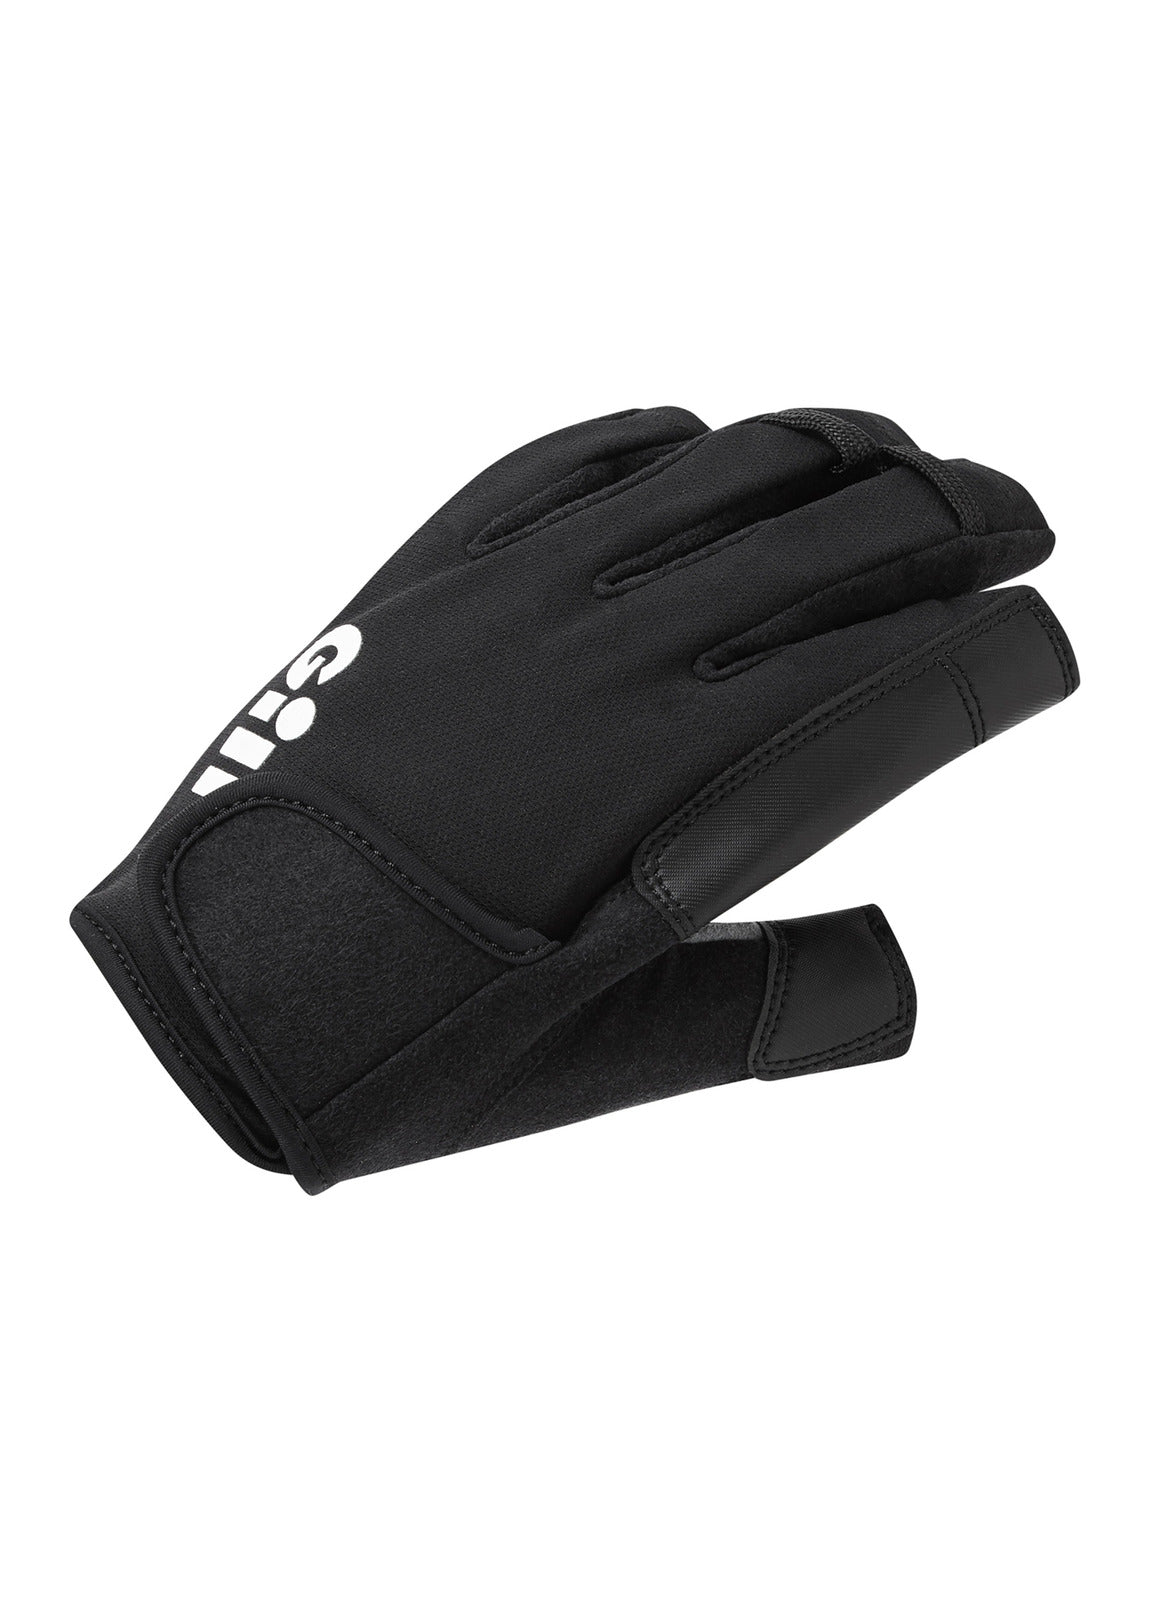 Gill Championship Gloves Short Finger - Black